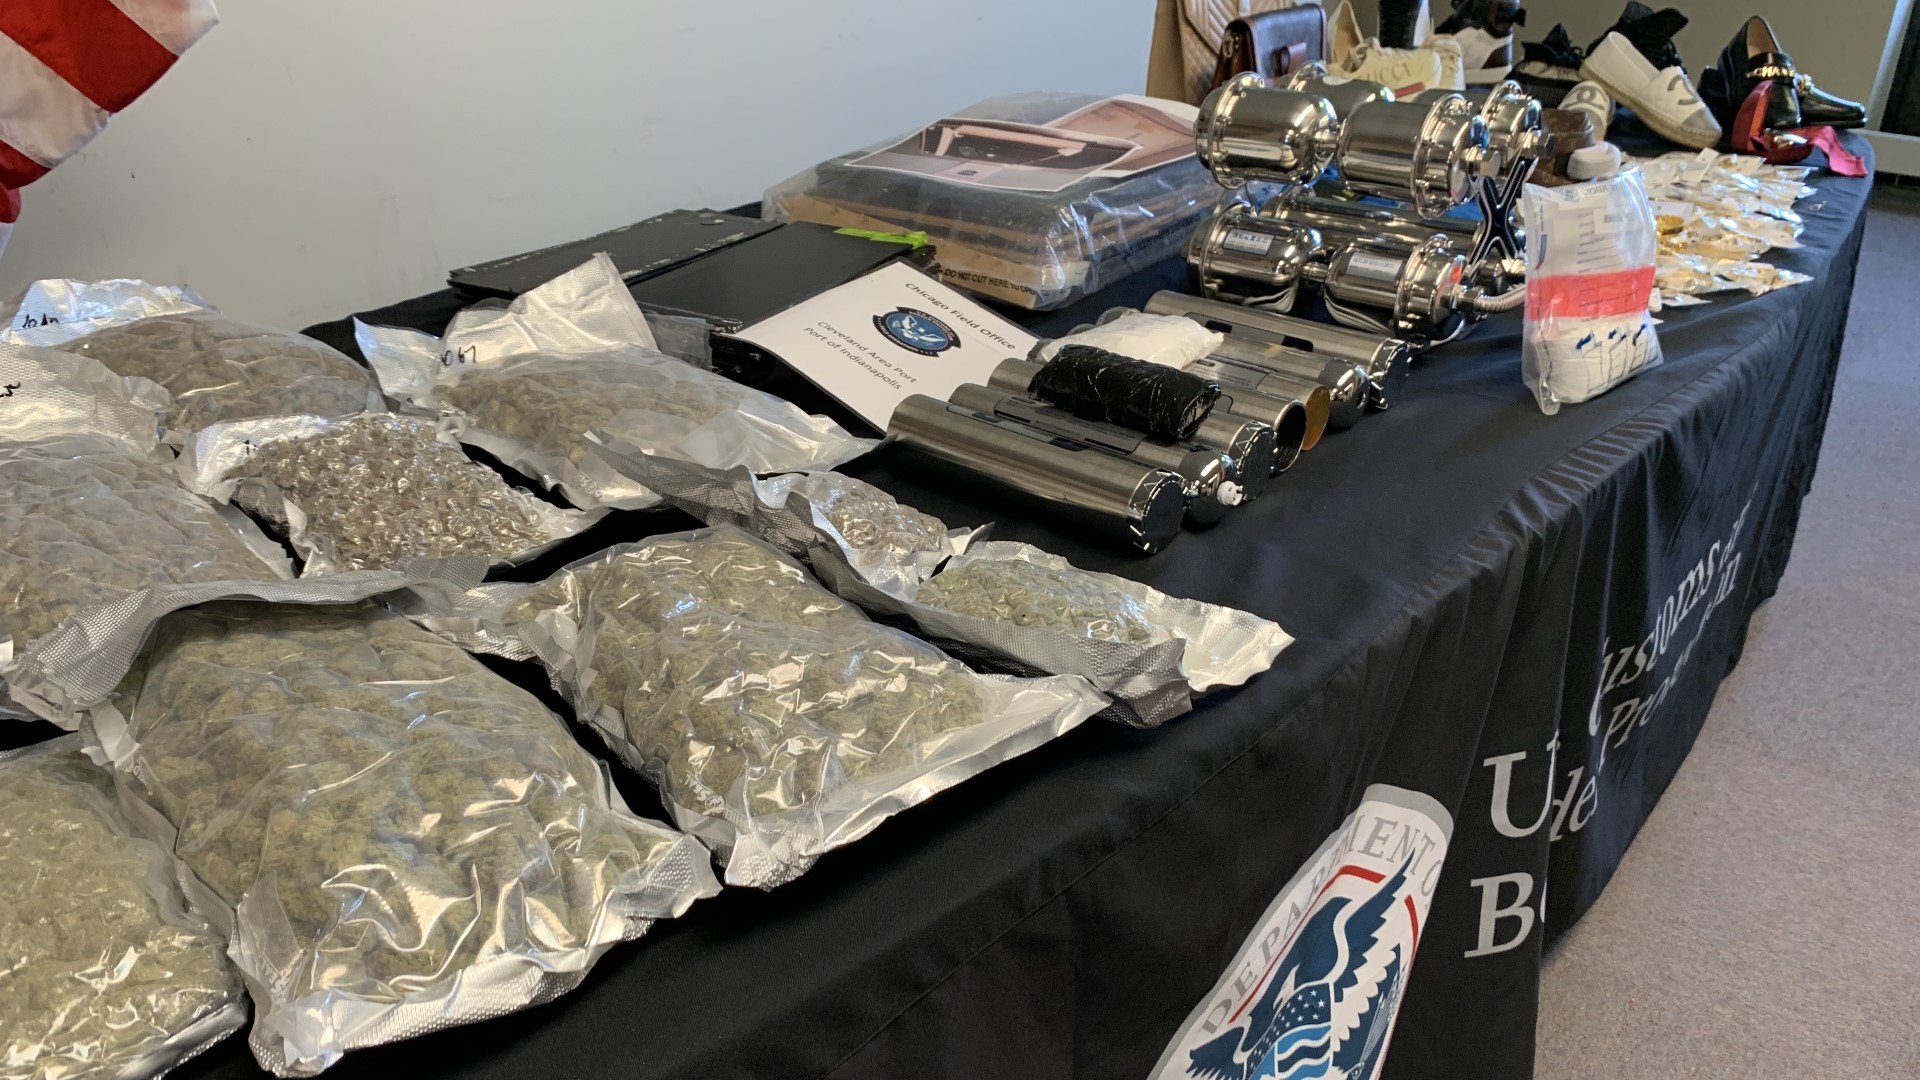 Indianapolis officers seized 738 shipments containing things like marijuana, Ketamine and prescription drugs.